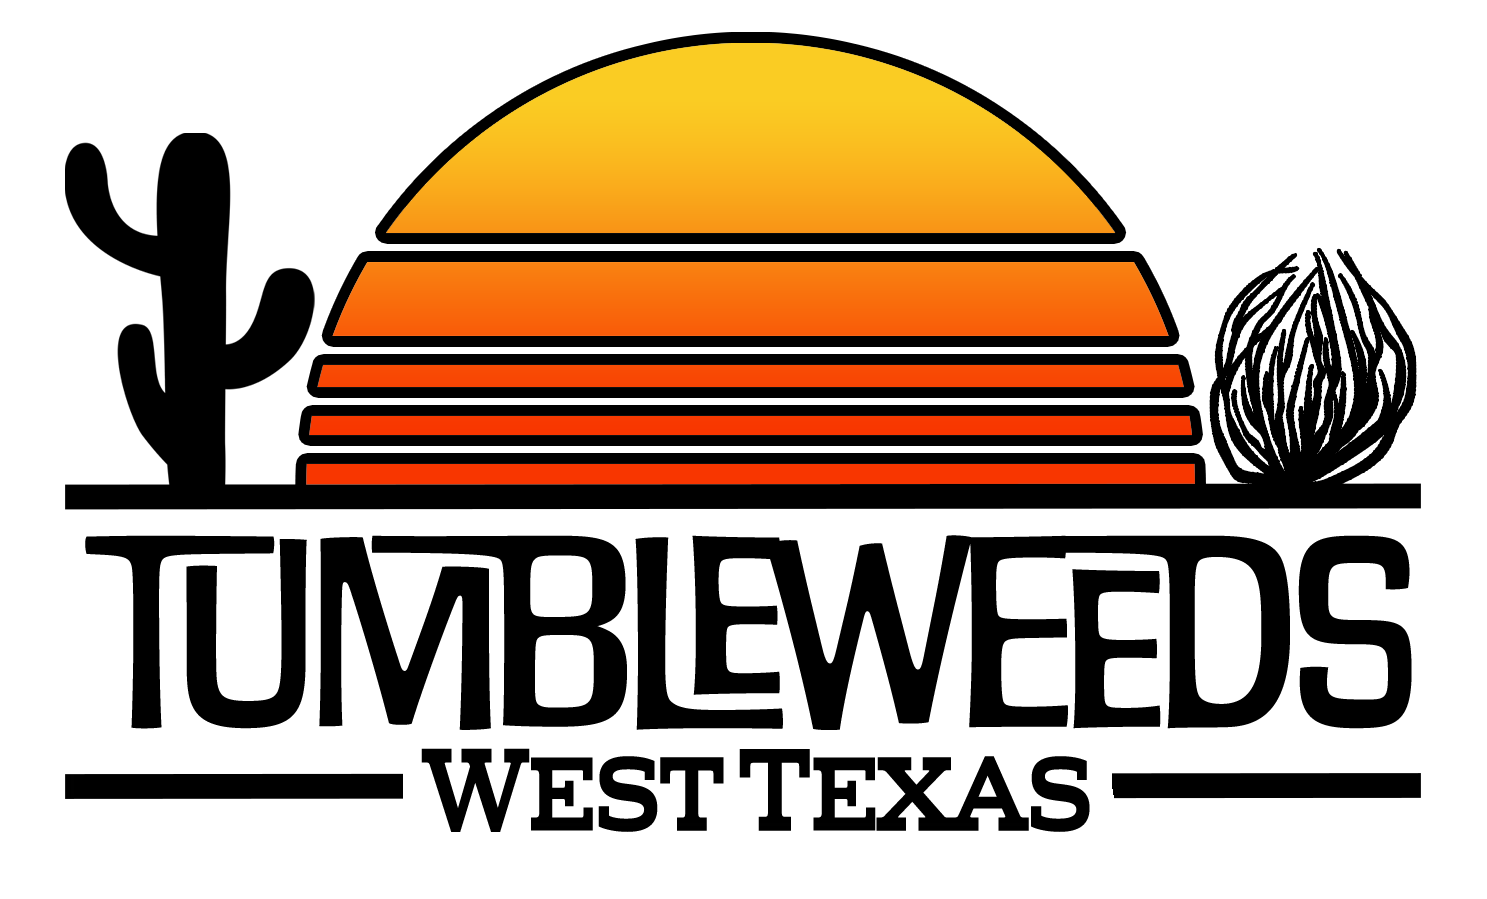 Tumbleweeds cover Wolfforth neighborhood, streets in west Texas